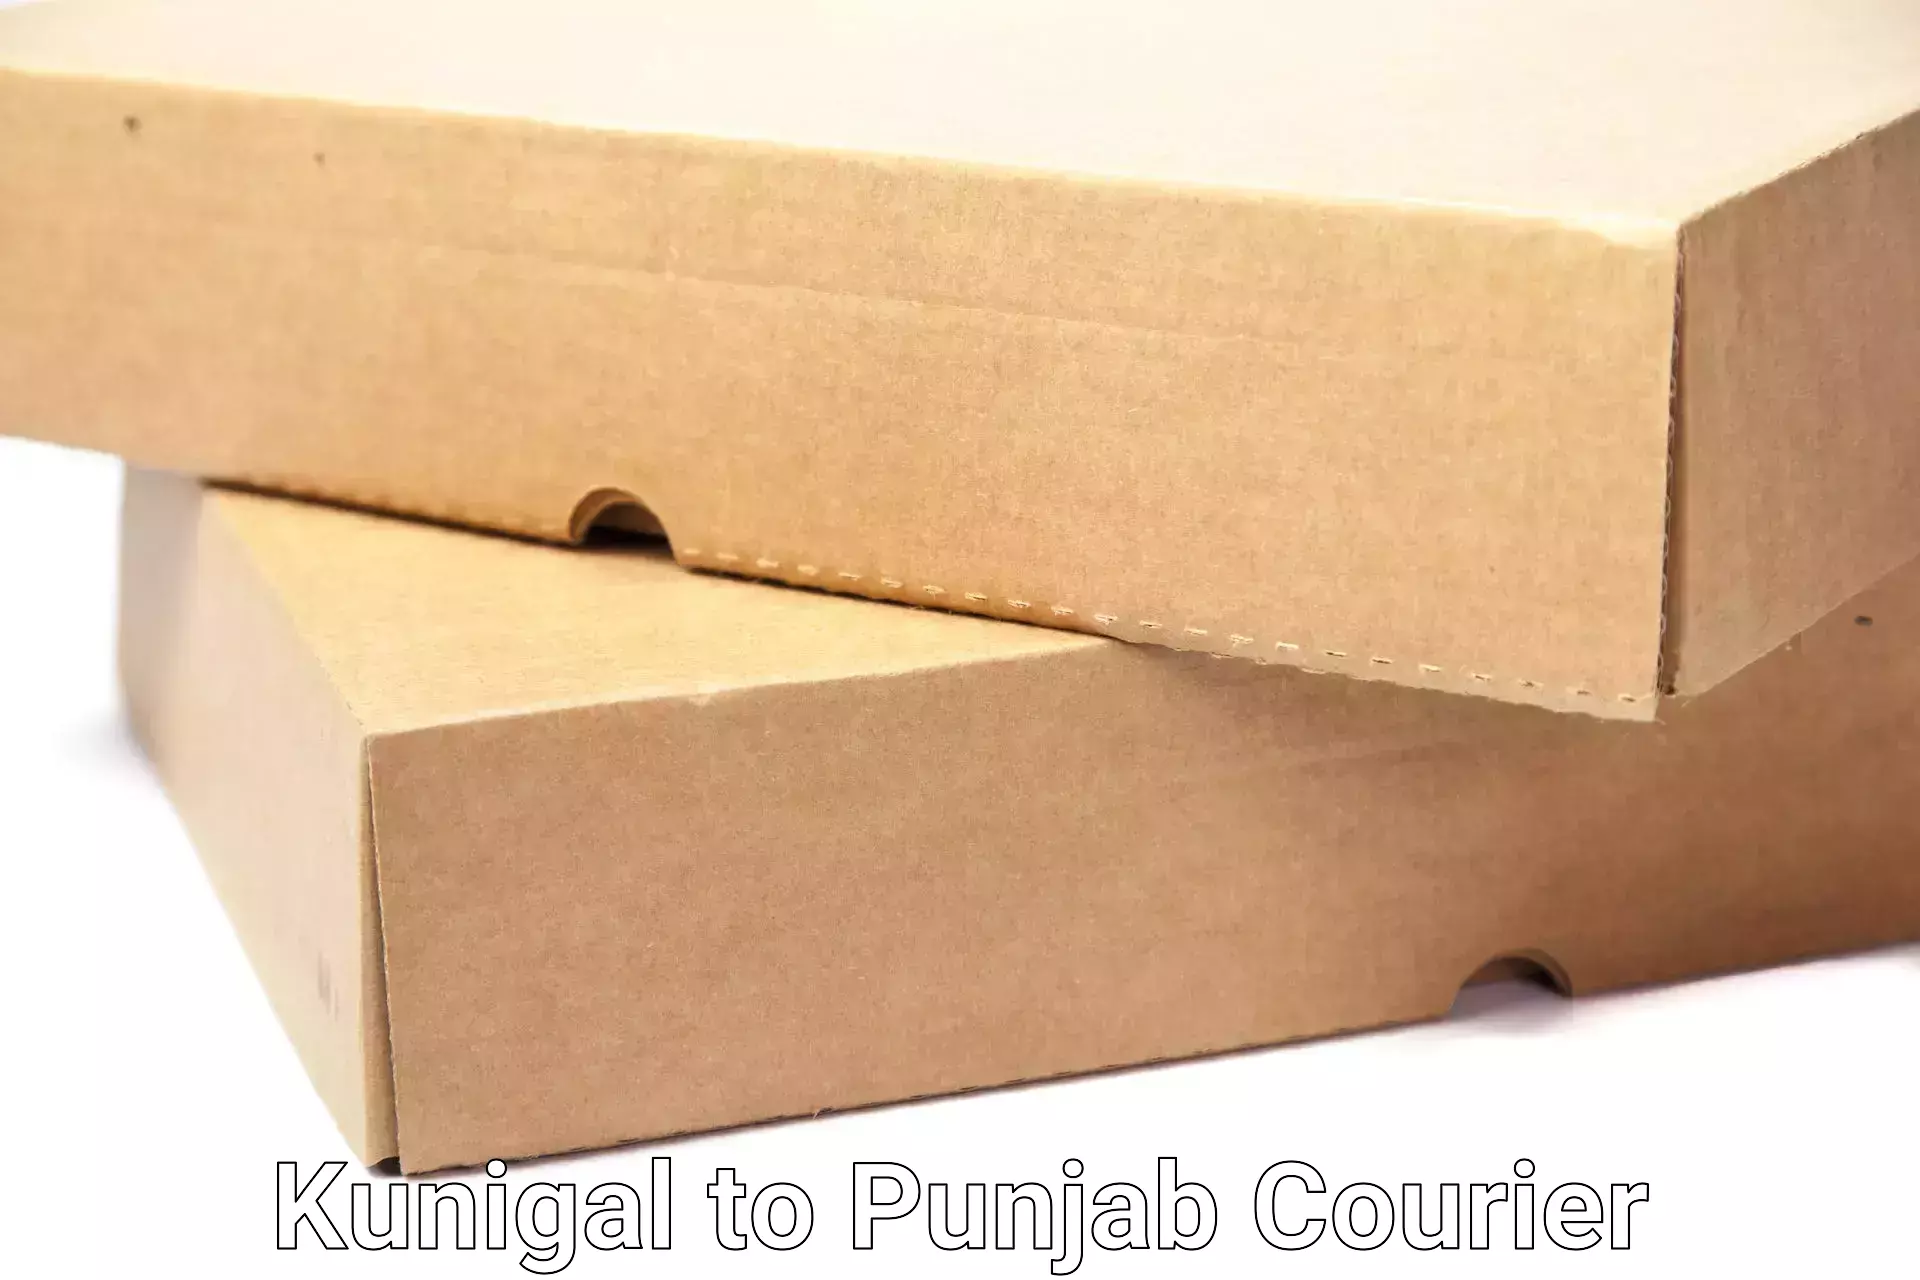 Furniture delivery service Kunigal to Punjab